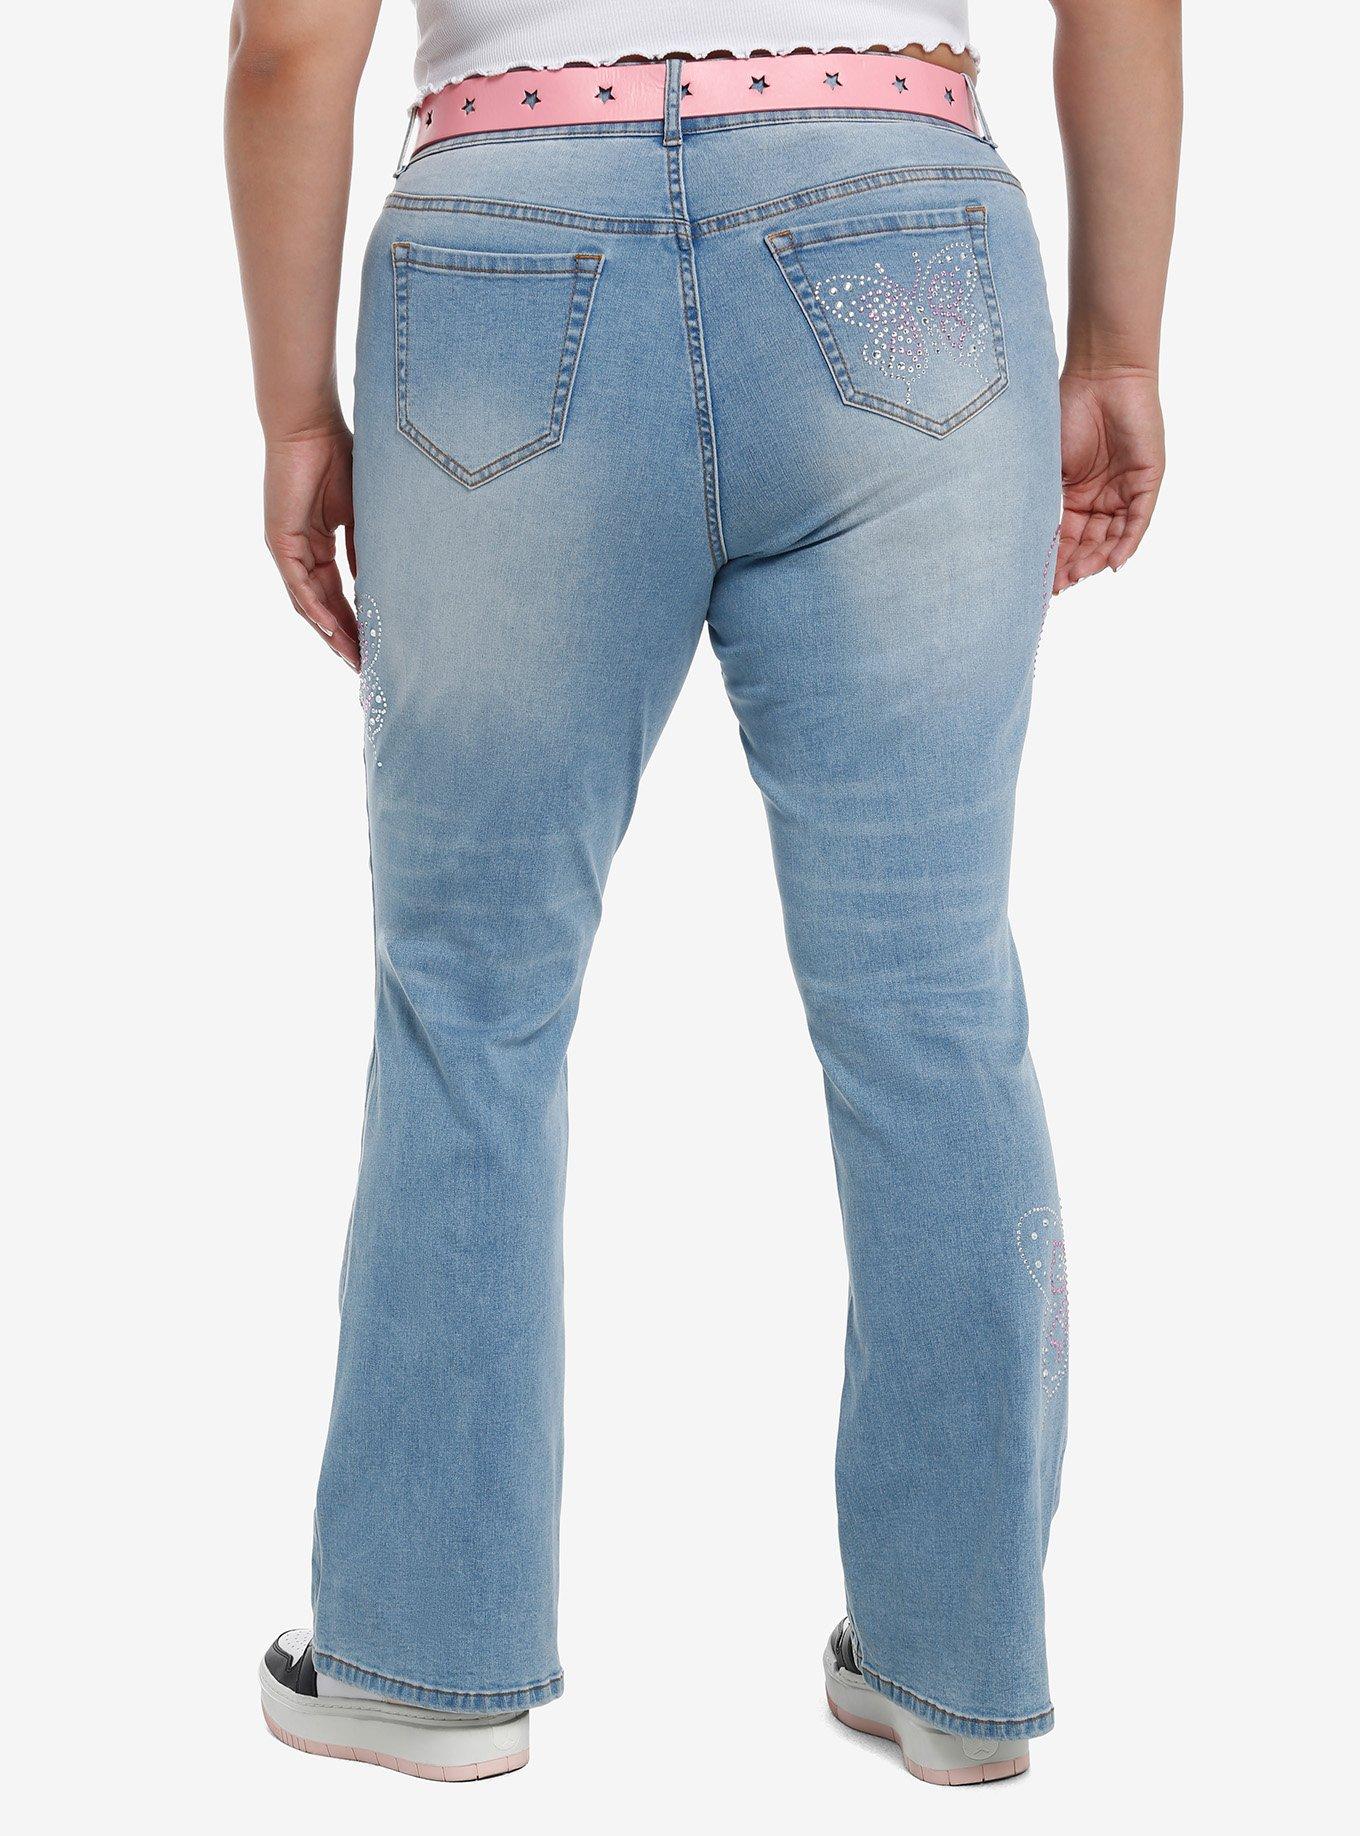 Sweet Society Pink Rhinestone Star Belt Low-Rise Jeans Plus Size, , hi-res